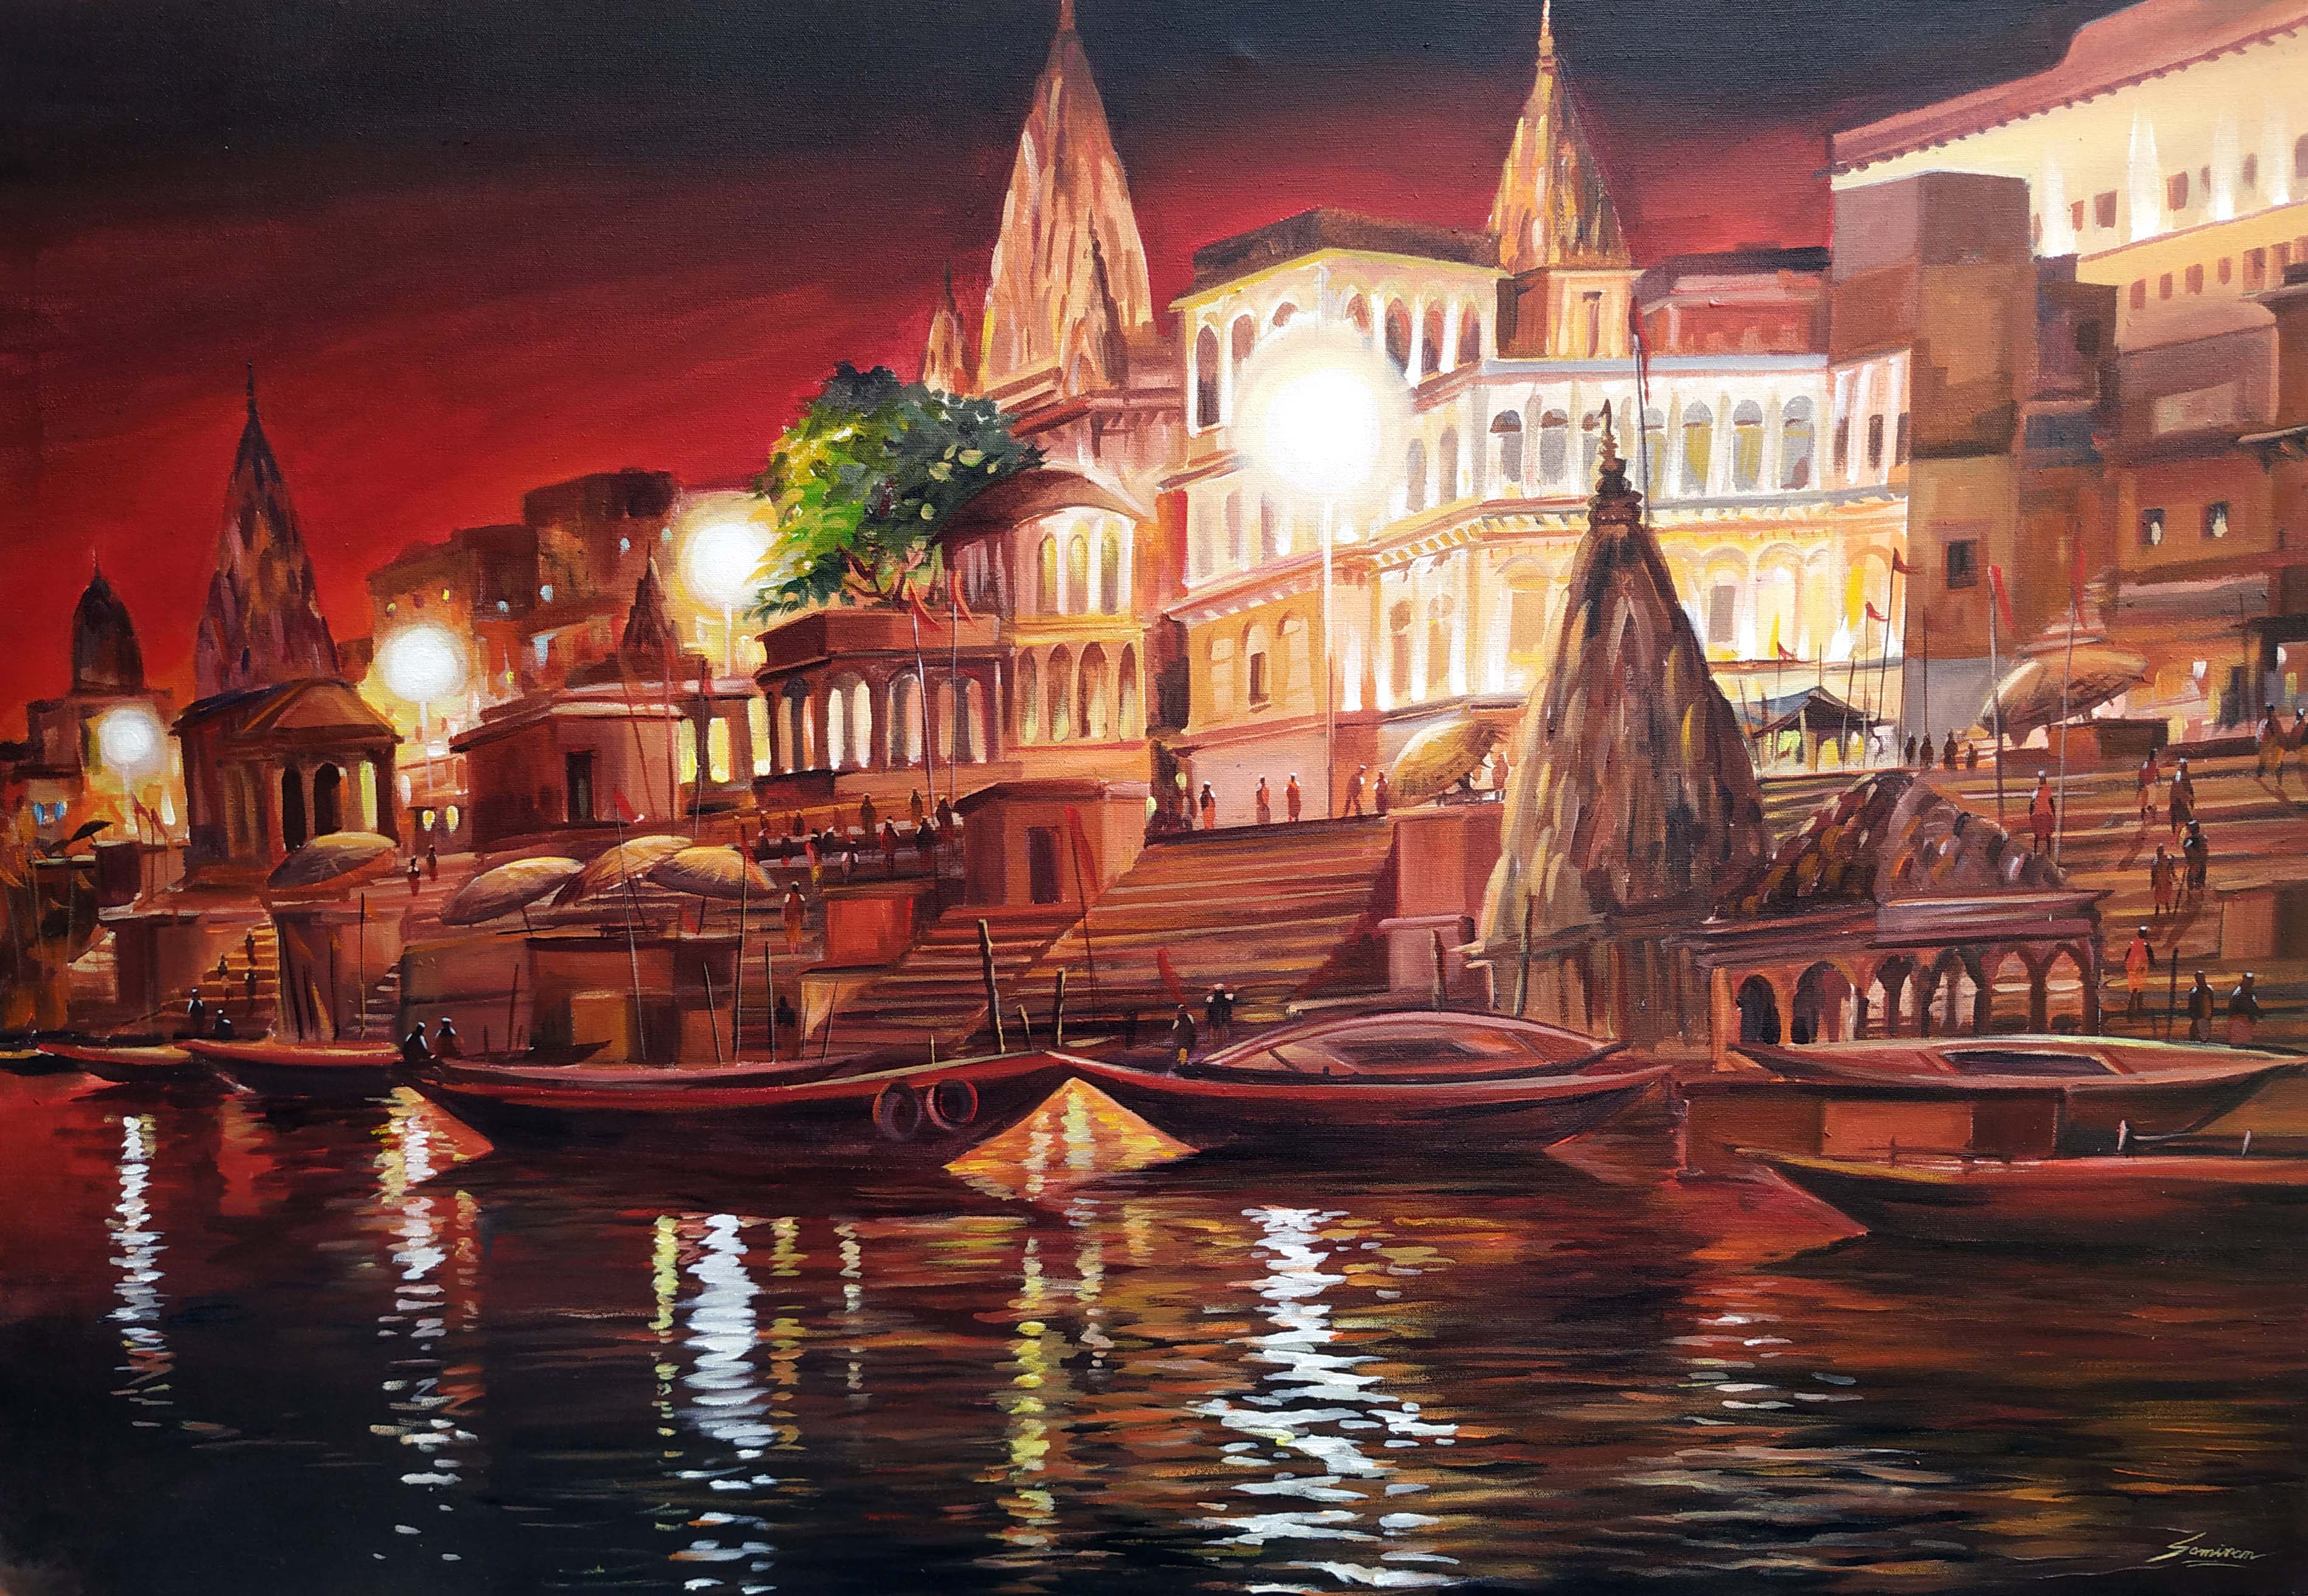 Silent Night Ghats at Varanasi